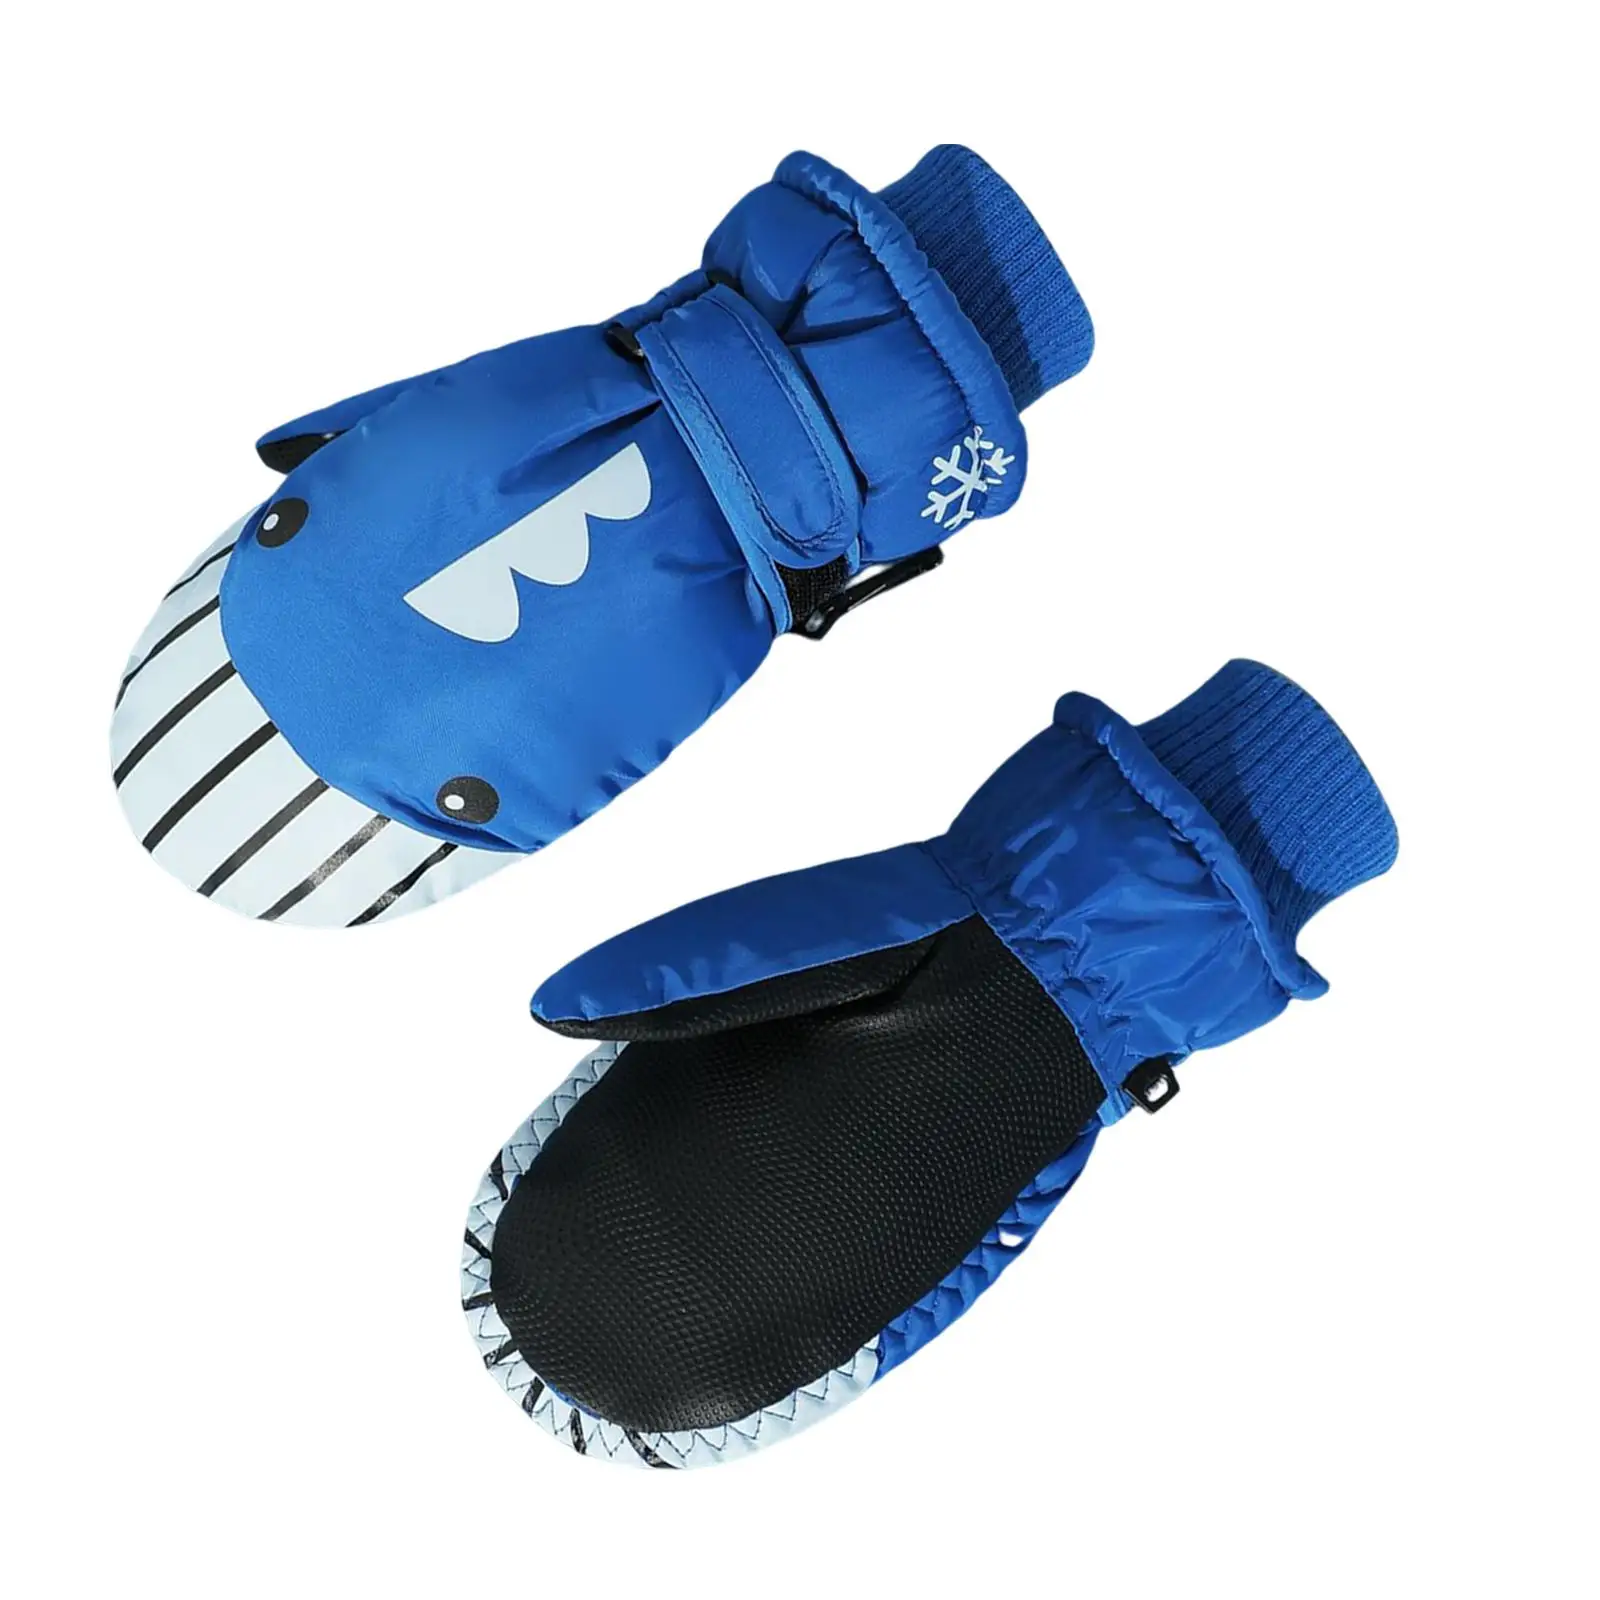 Mittens Durable Waterproof Winter Warm Practical Snow Ski Gloves for Little Girls Snowmen